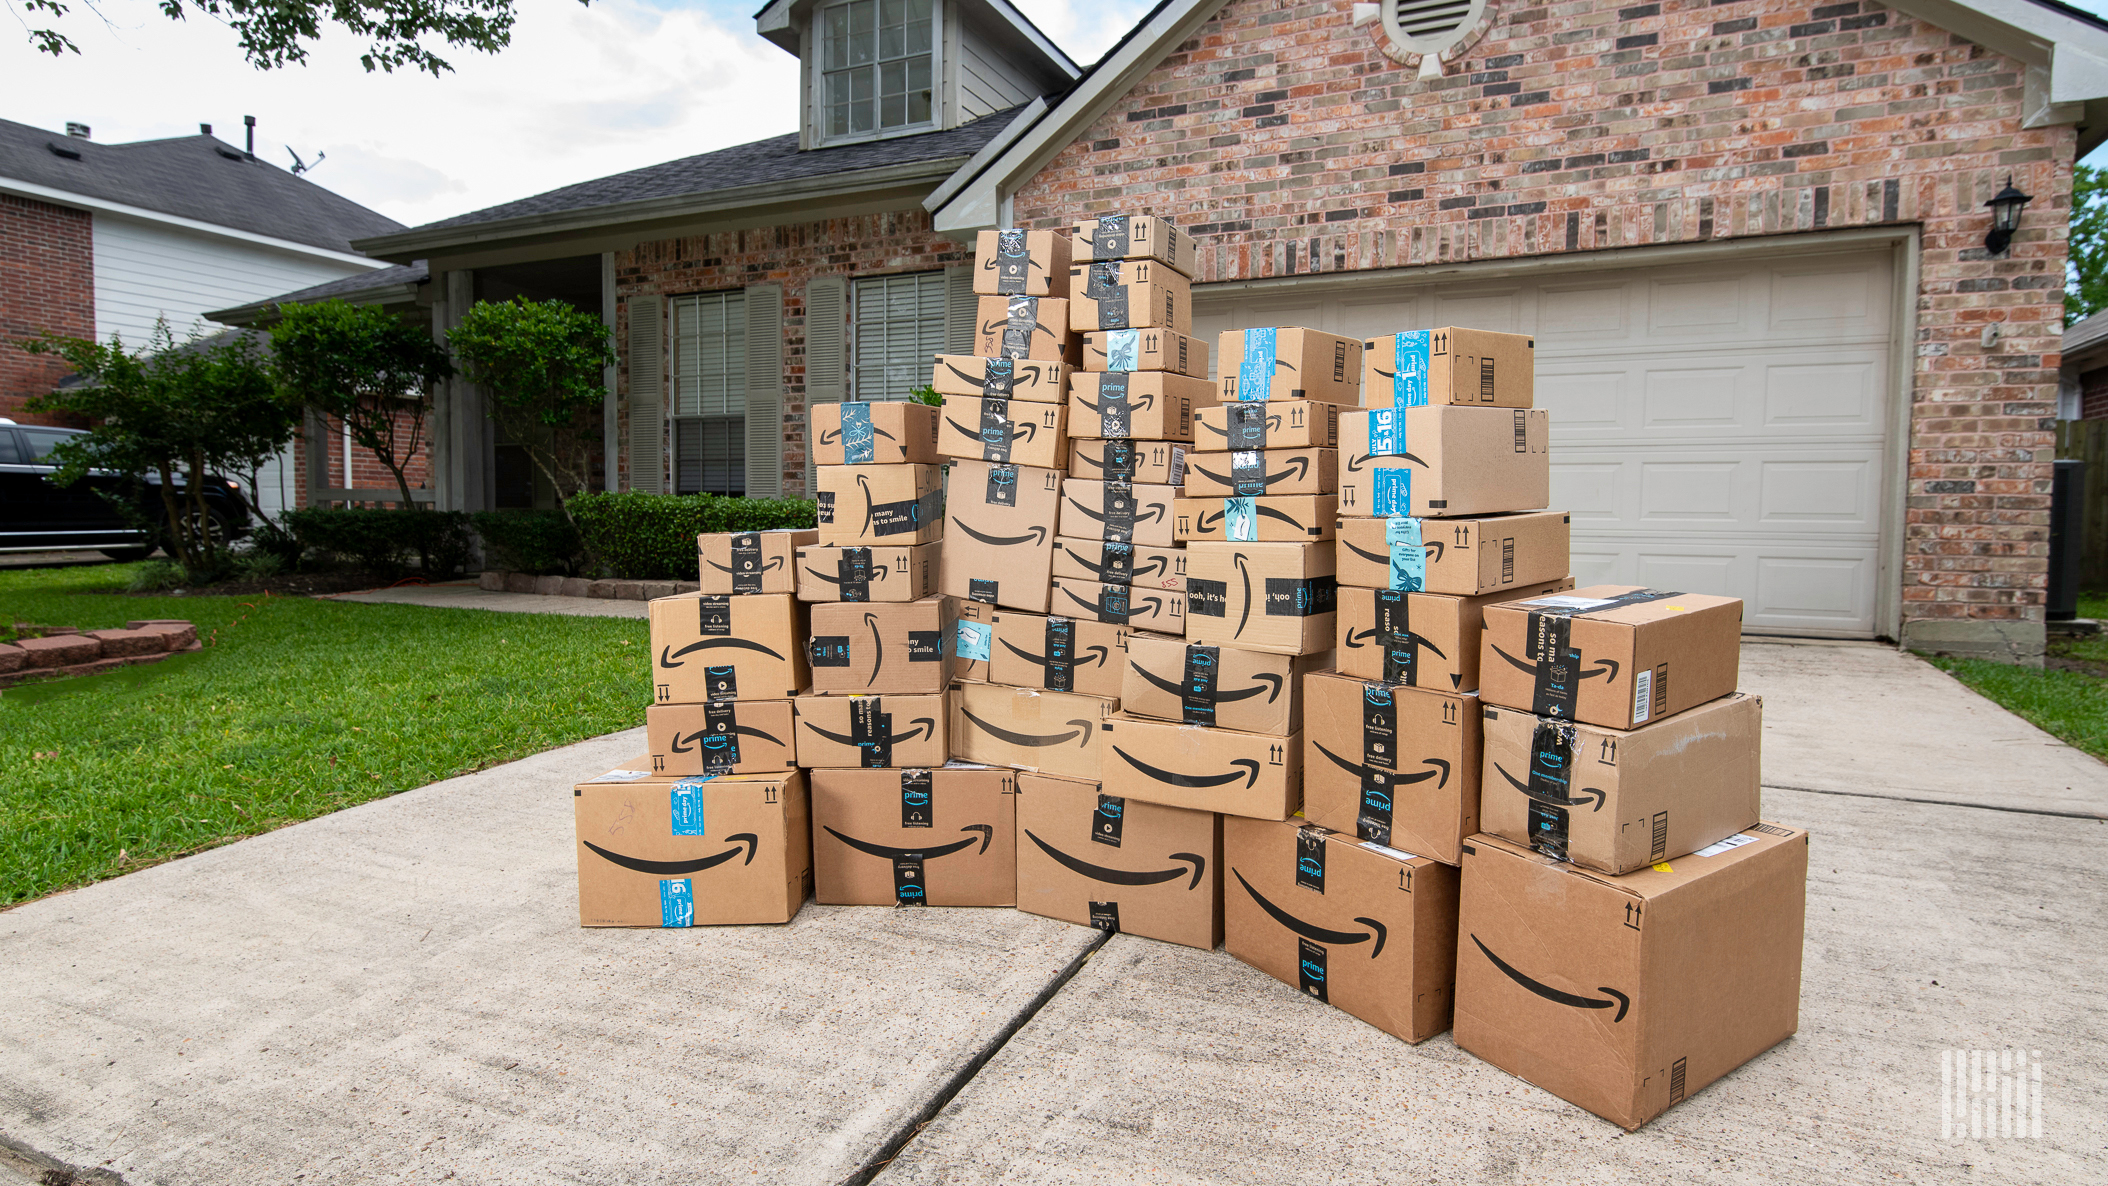 America's love affair with Amazon